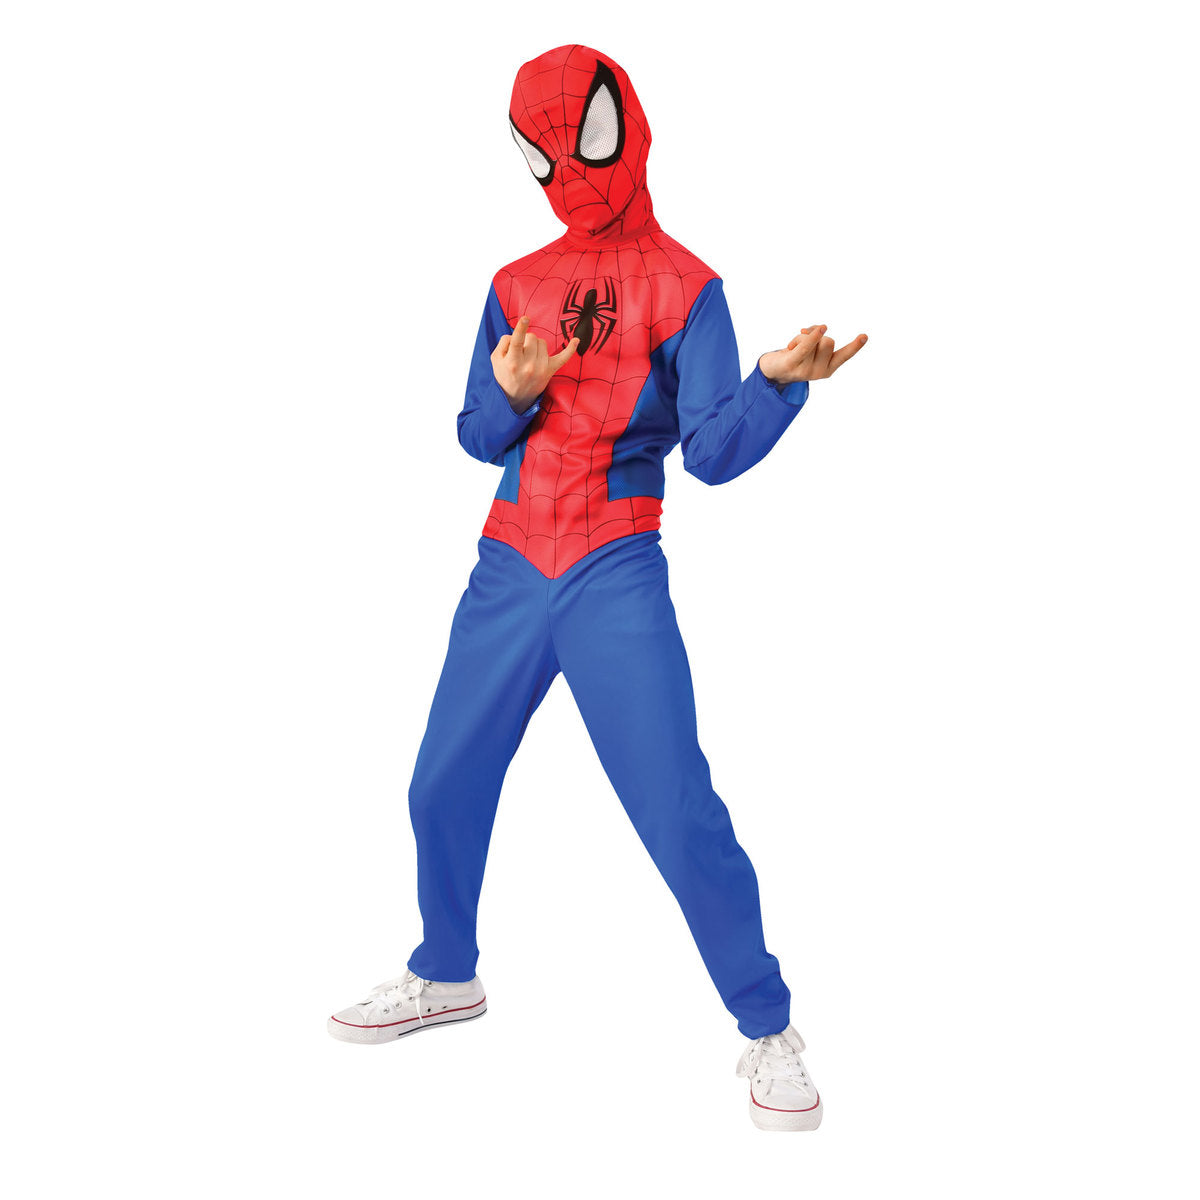 Spider-Man Dress Up Costume